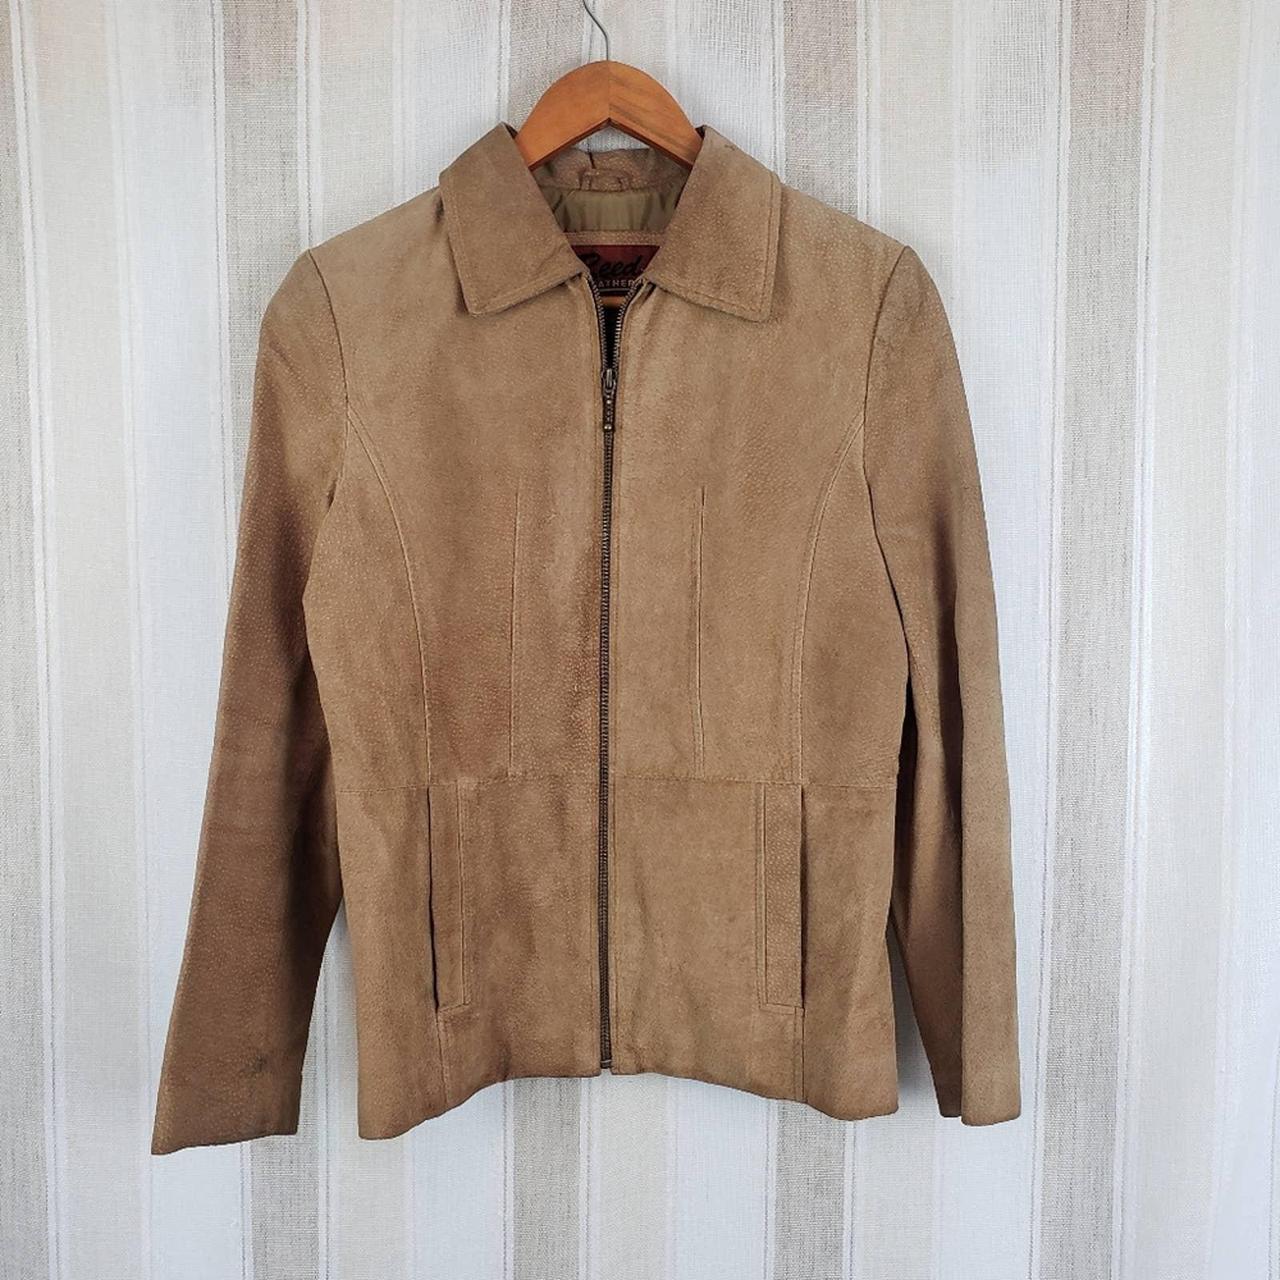 Product Image 1 - Genuine Leather Tan Jacket Reed